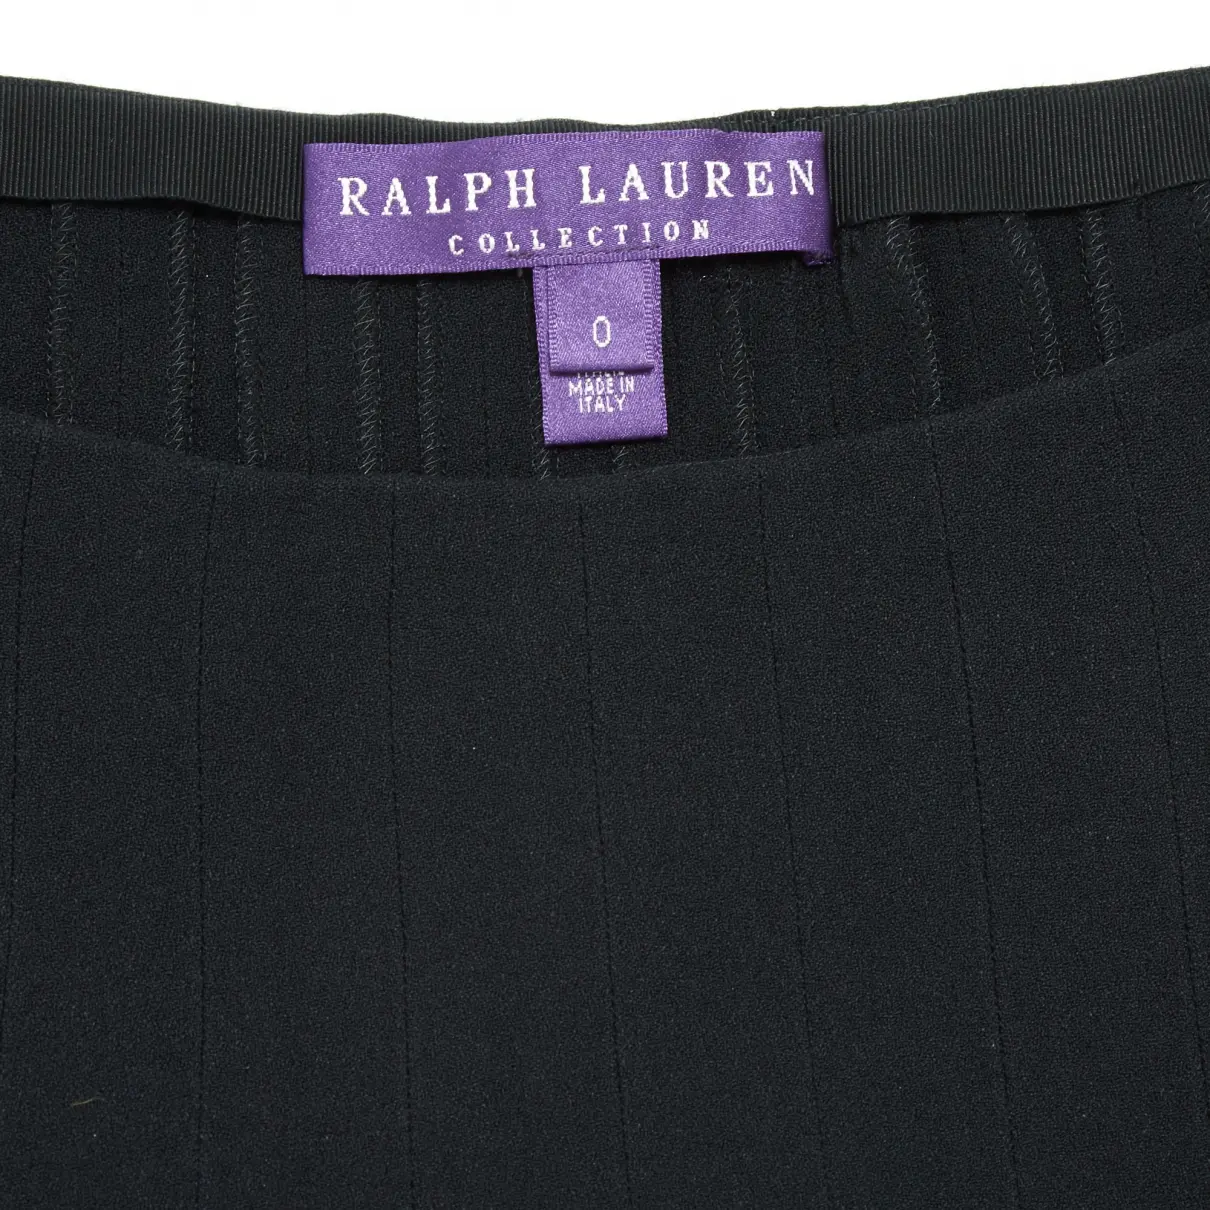 Buy RALPH LAUREN NON Mini skirt online